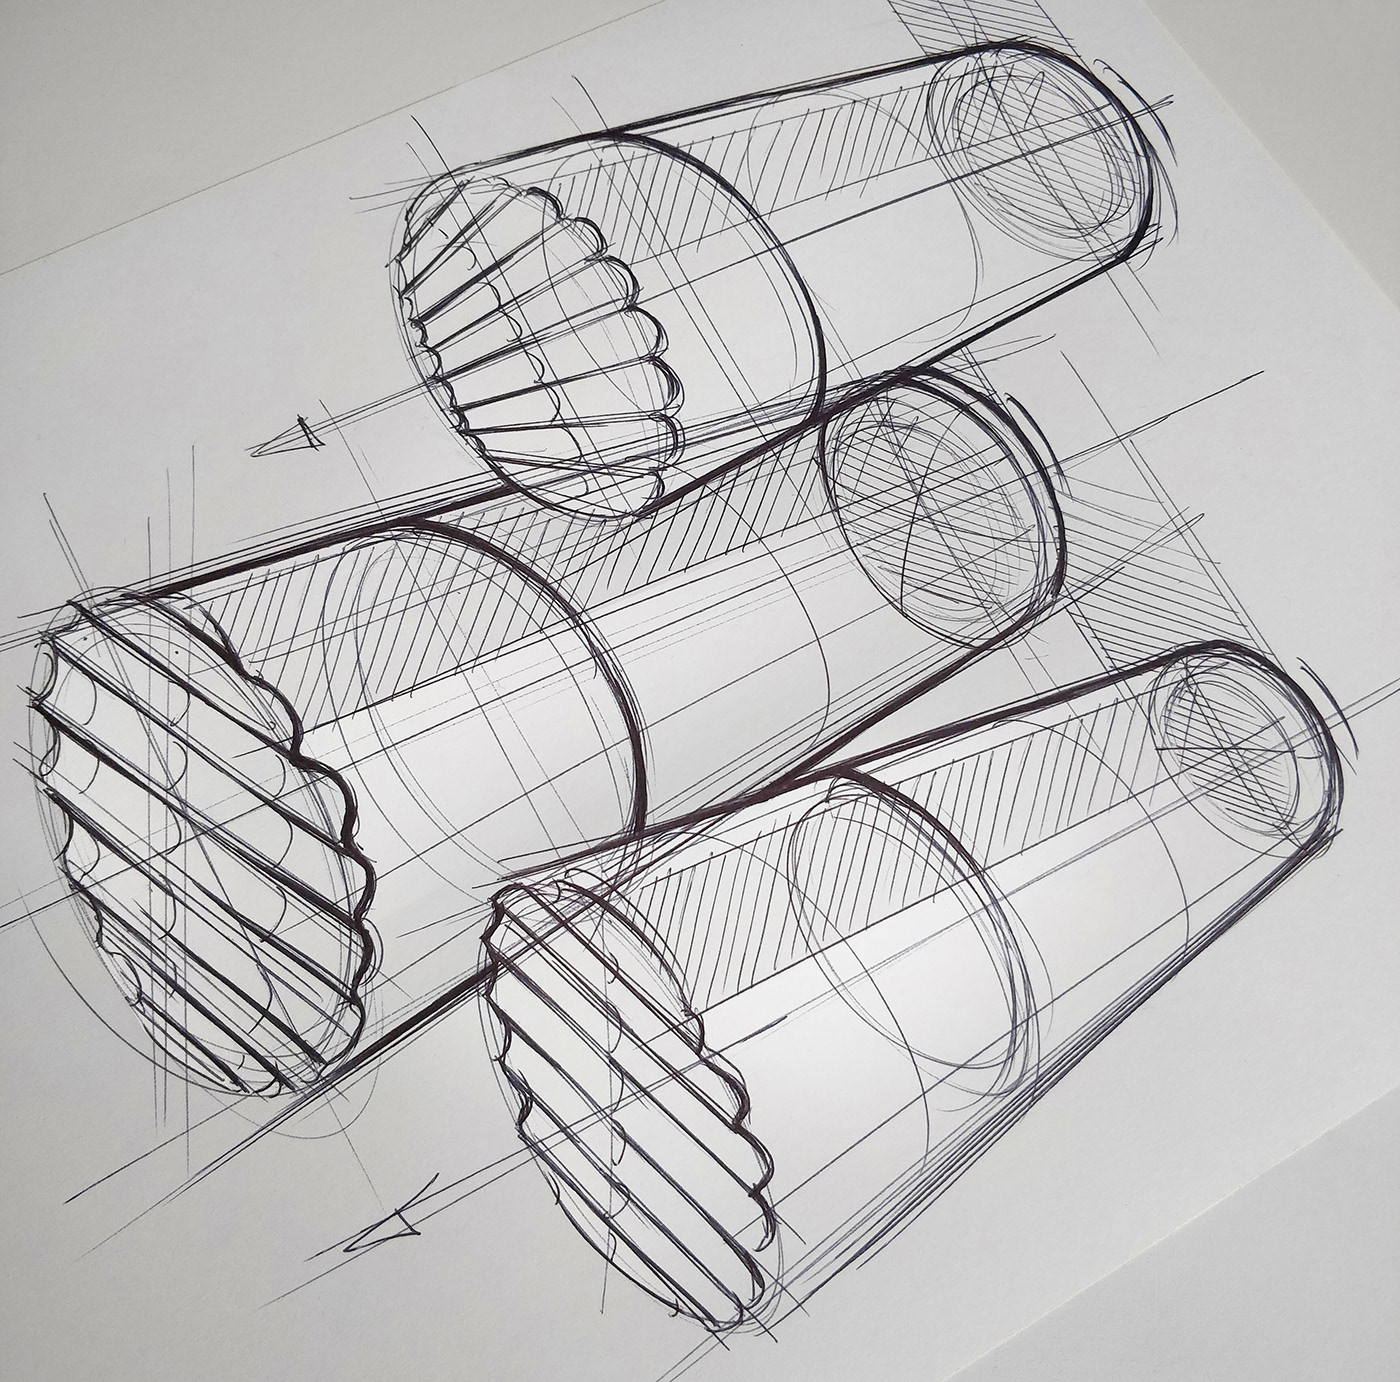 design designer Drawing  product produkt sketch sketcher sketching technical zeichnen